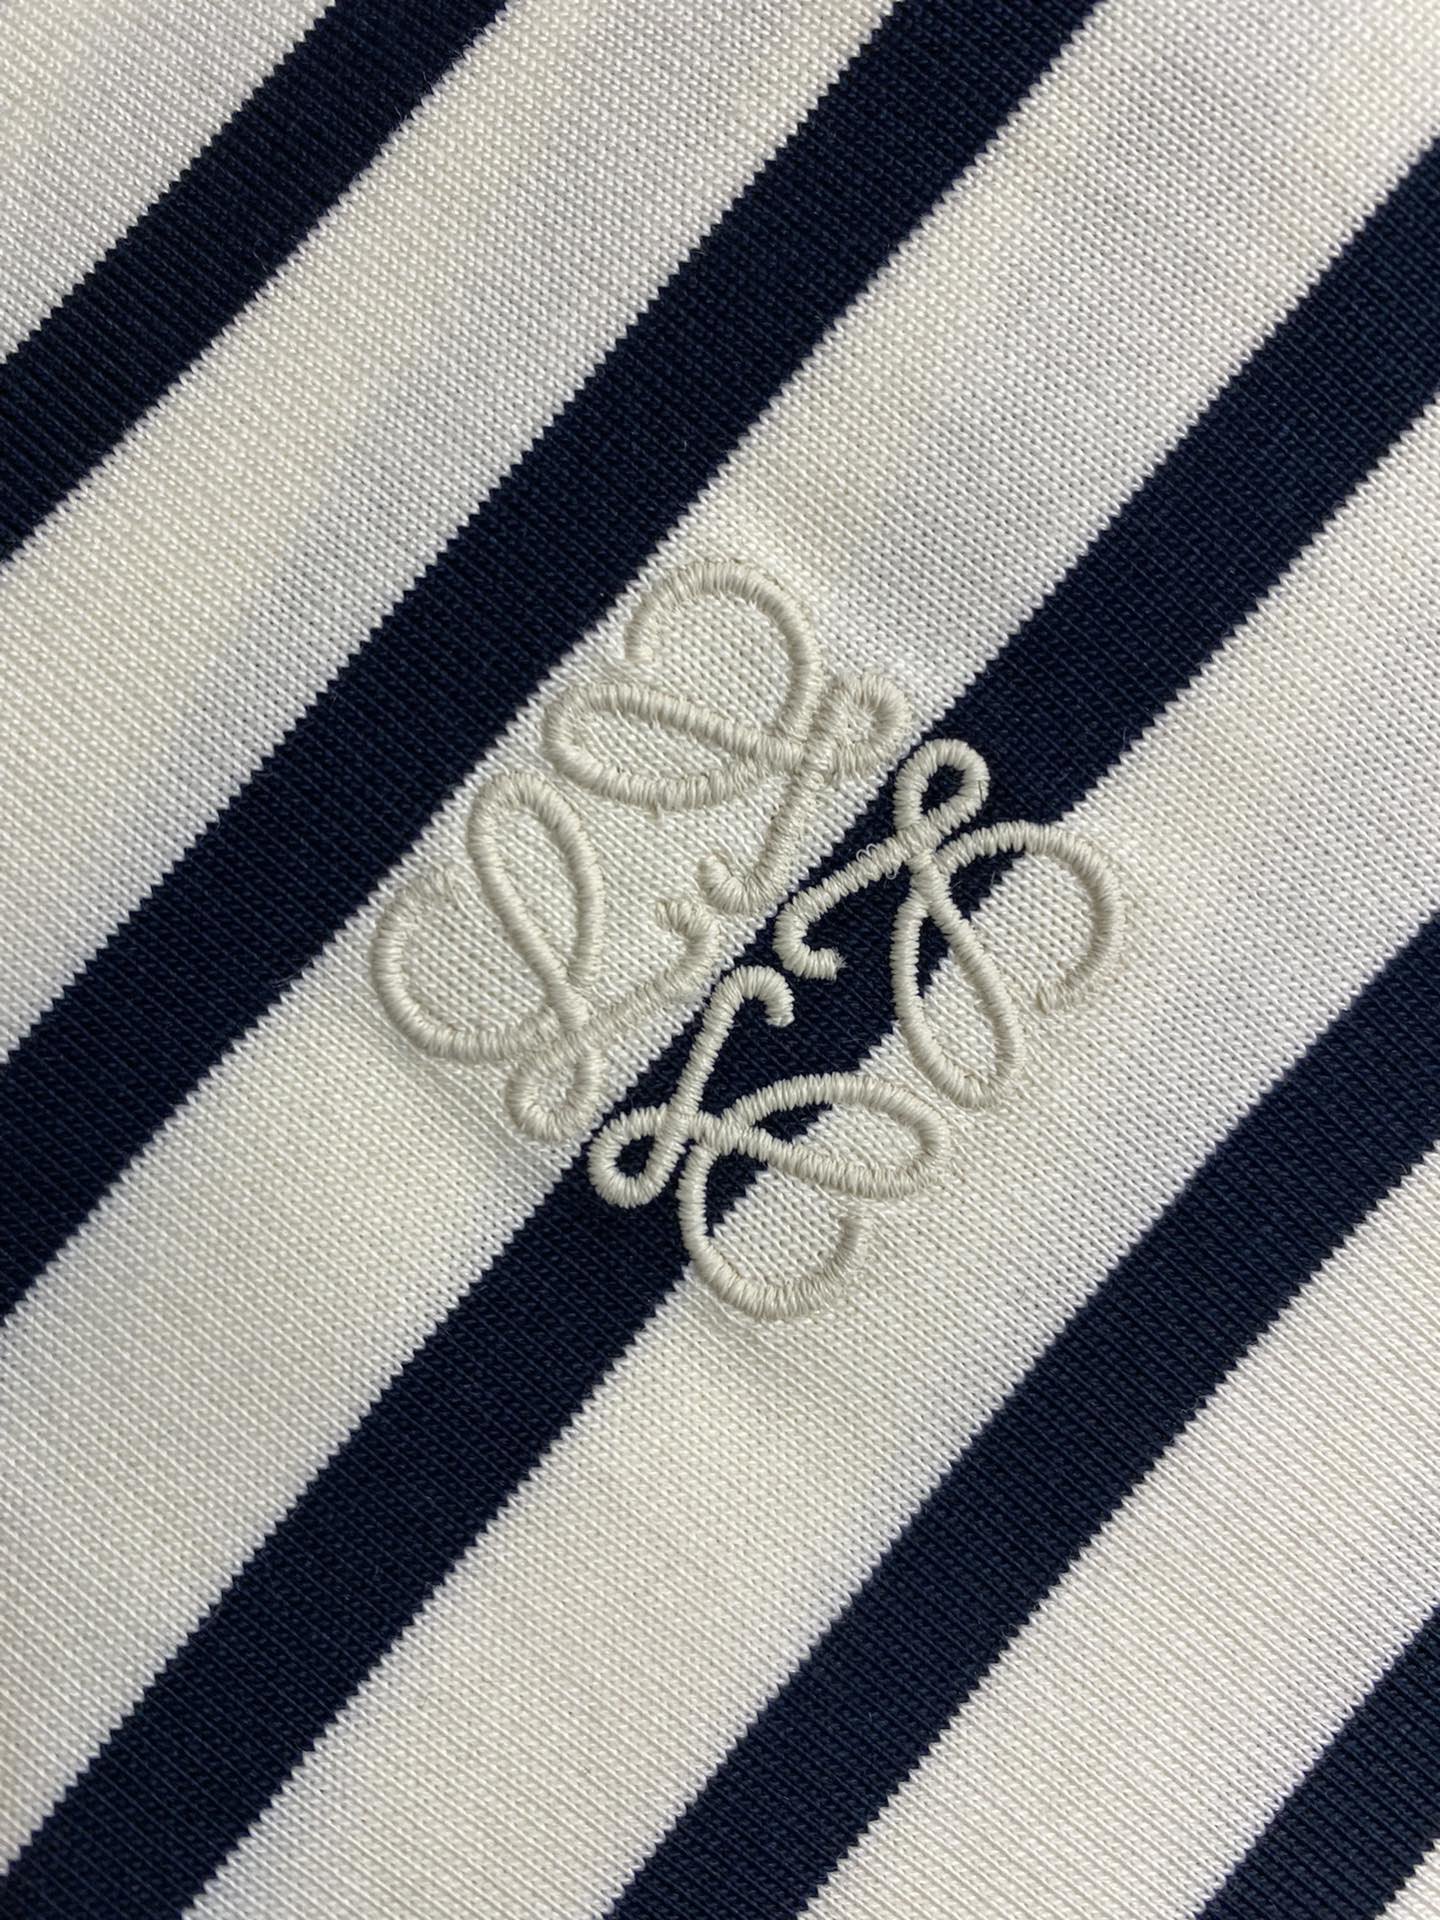 Loewe24春秋新品经典条纹圆领短袖T恤他的剪裁精细考究无可挑剔穿搭艺术碰撞个性打破传统怪诞美学有个性